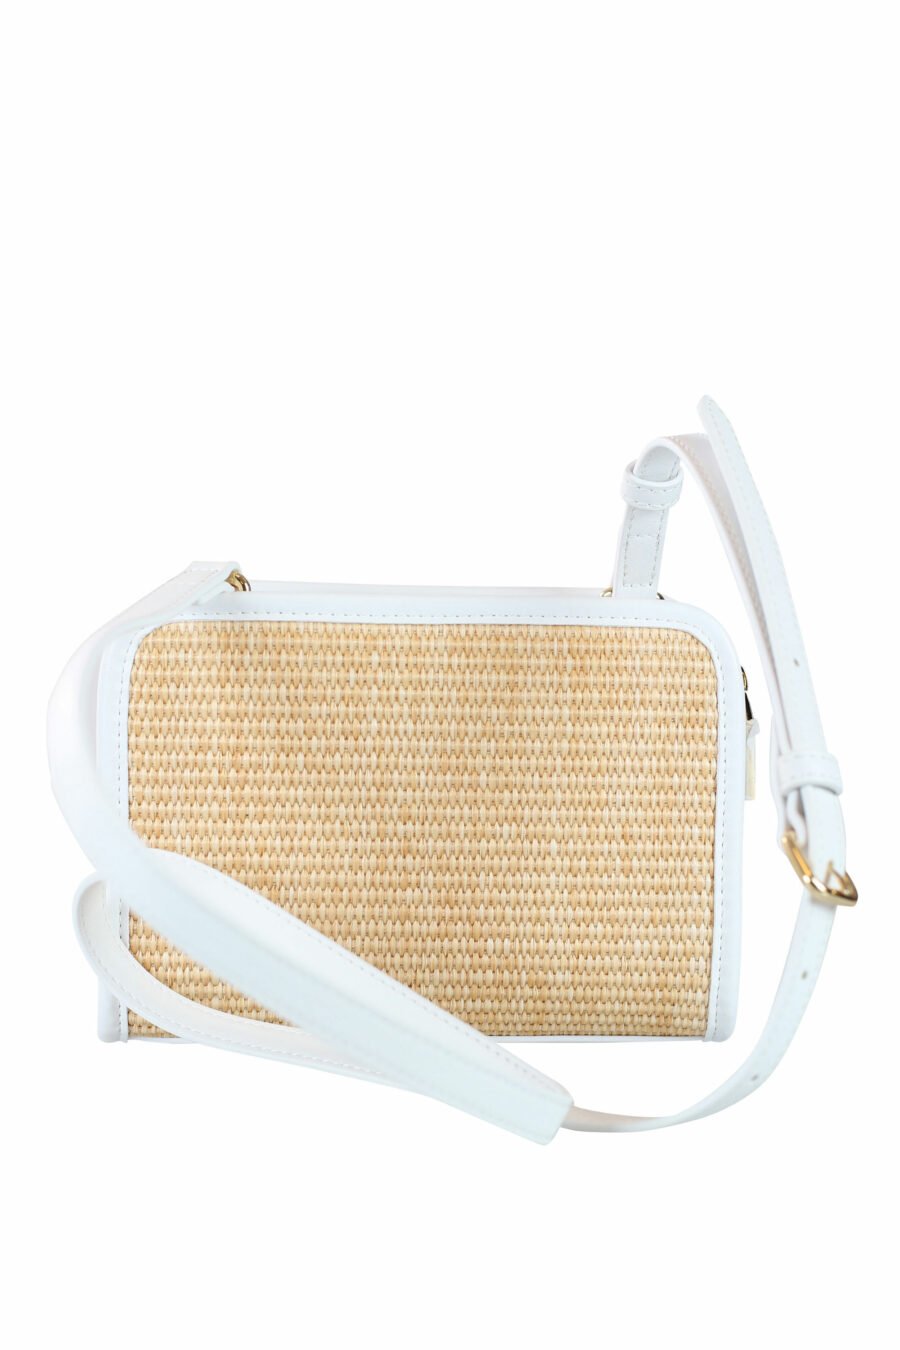 Wicker shoulder bag with white maxilogo - IMG 0069